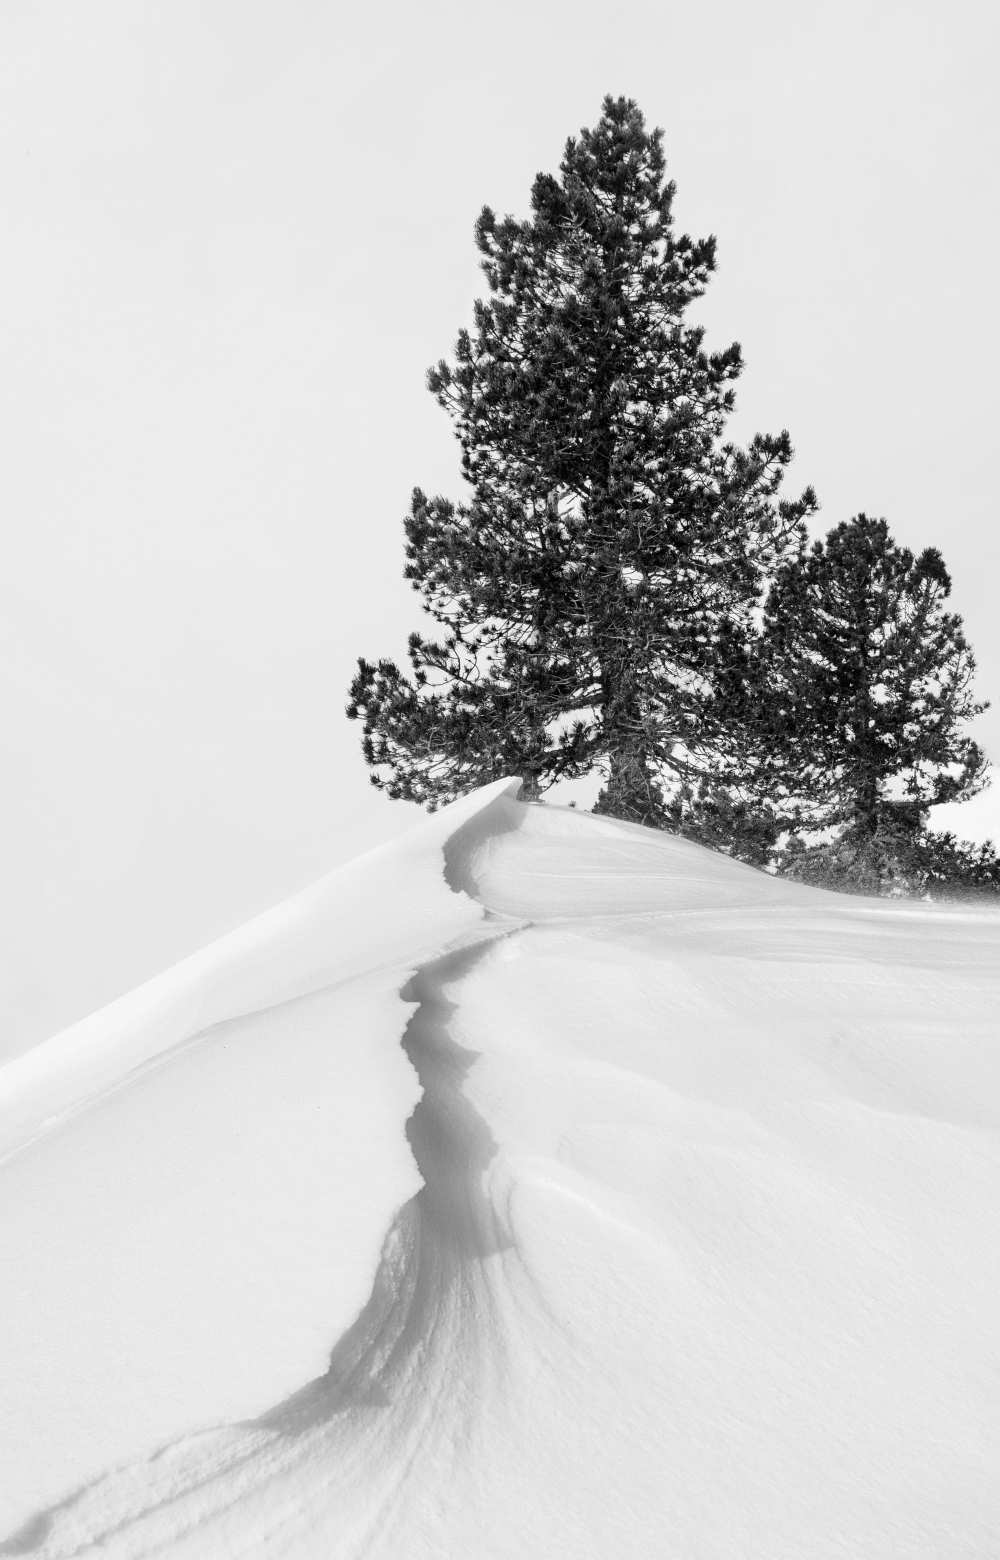 About the snow and forms od Rodrigo Núñez Buj